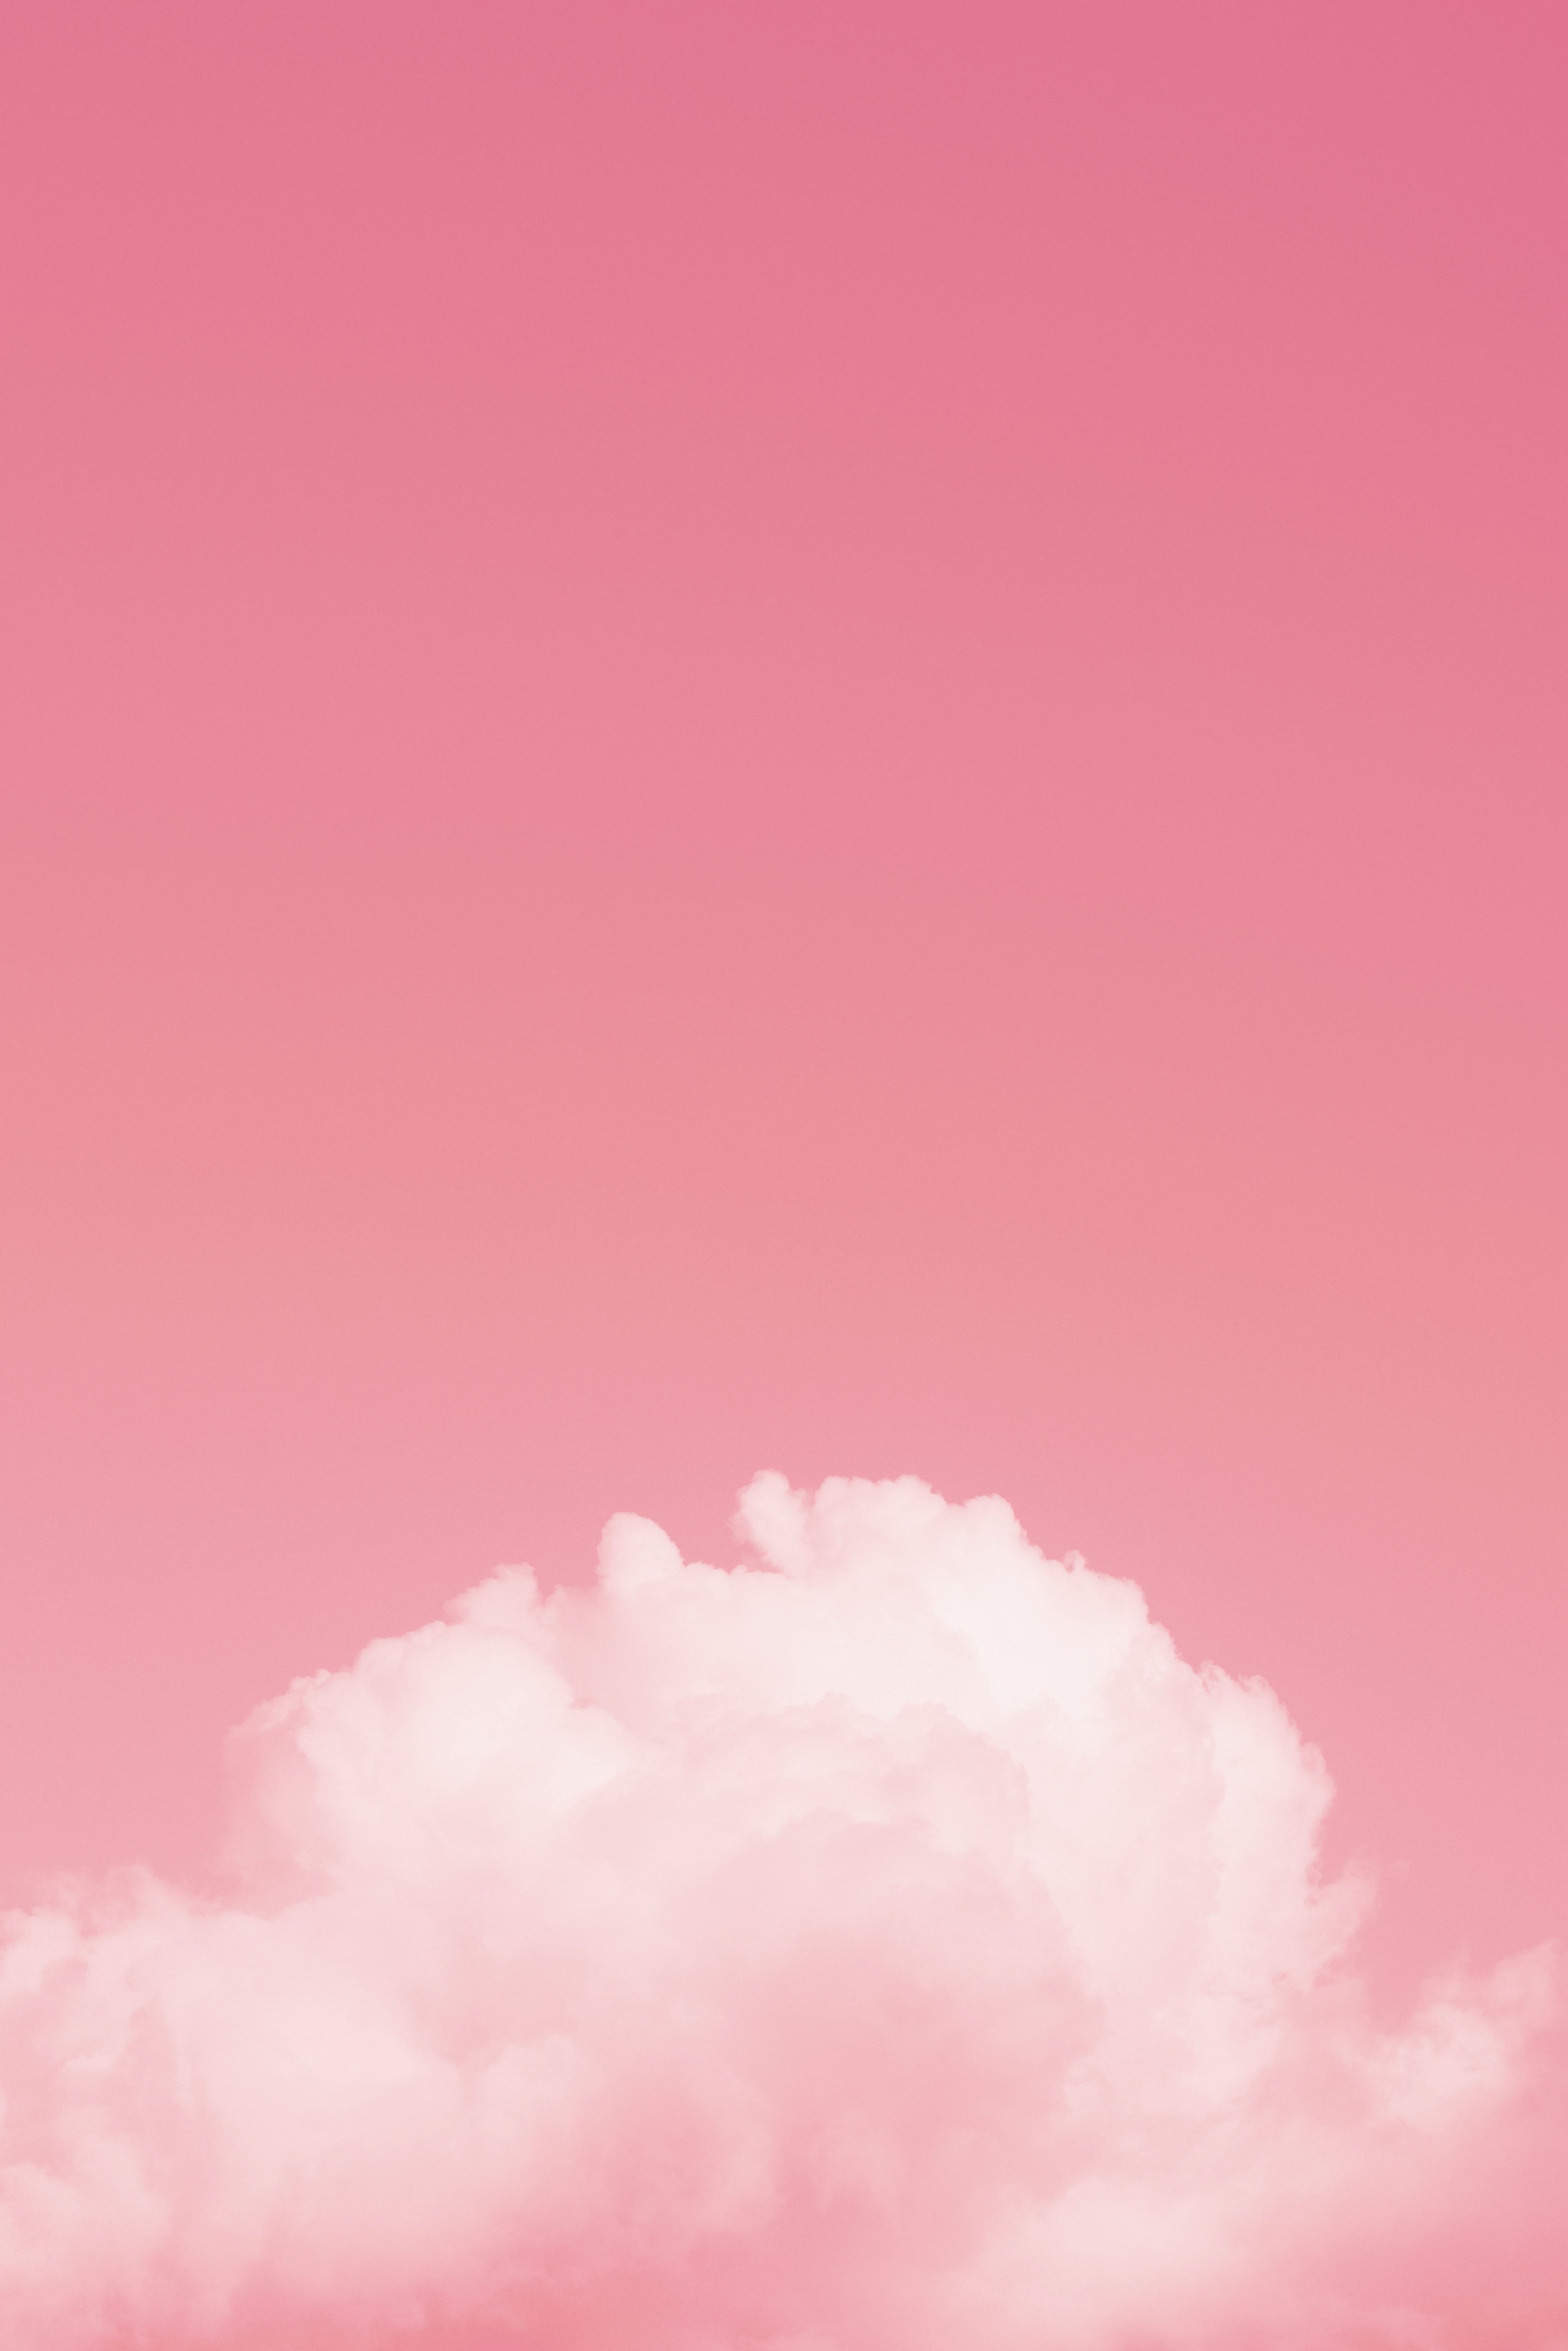 47+ Iphone Wallpaper Hd Pink